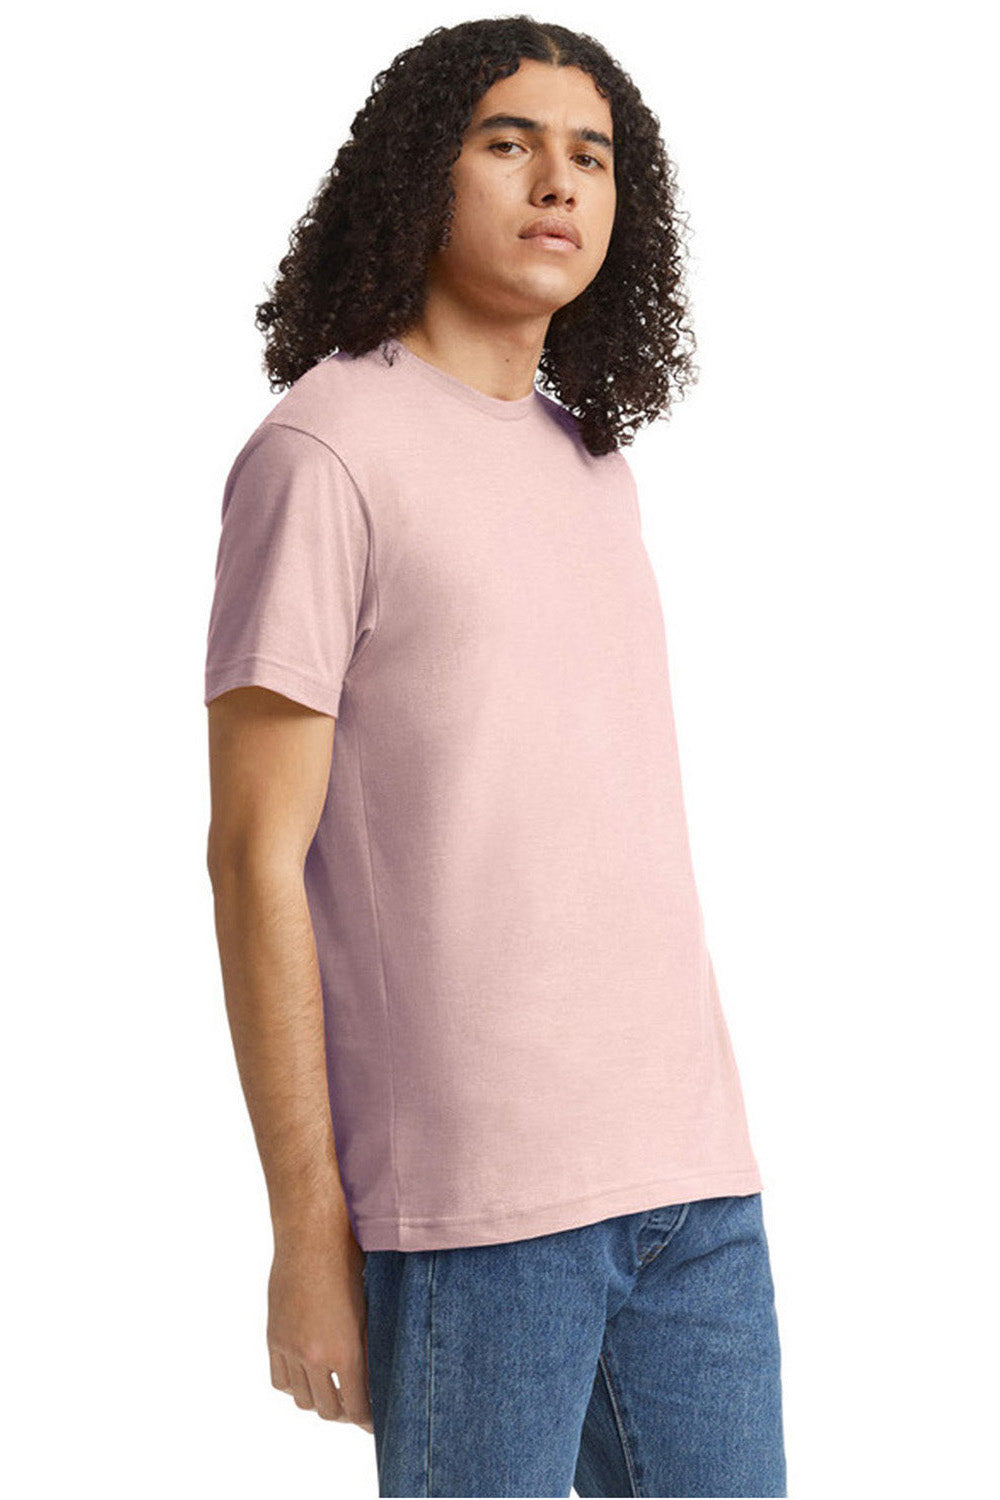 American Apparel 2001CVC Mens CVC Short Sleeve Crewneck T-Shirt Heather Blush Pink Model Side